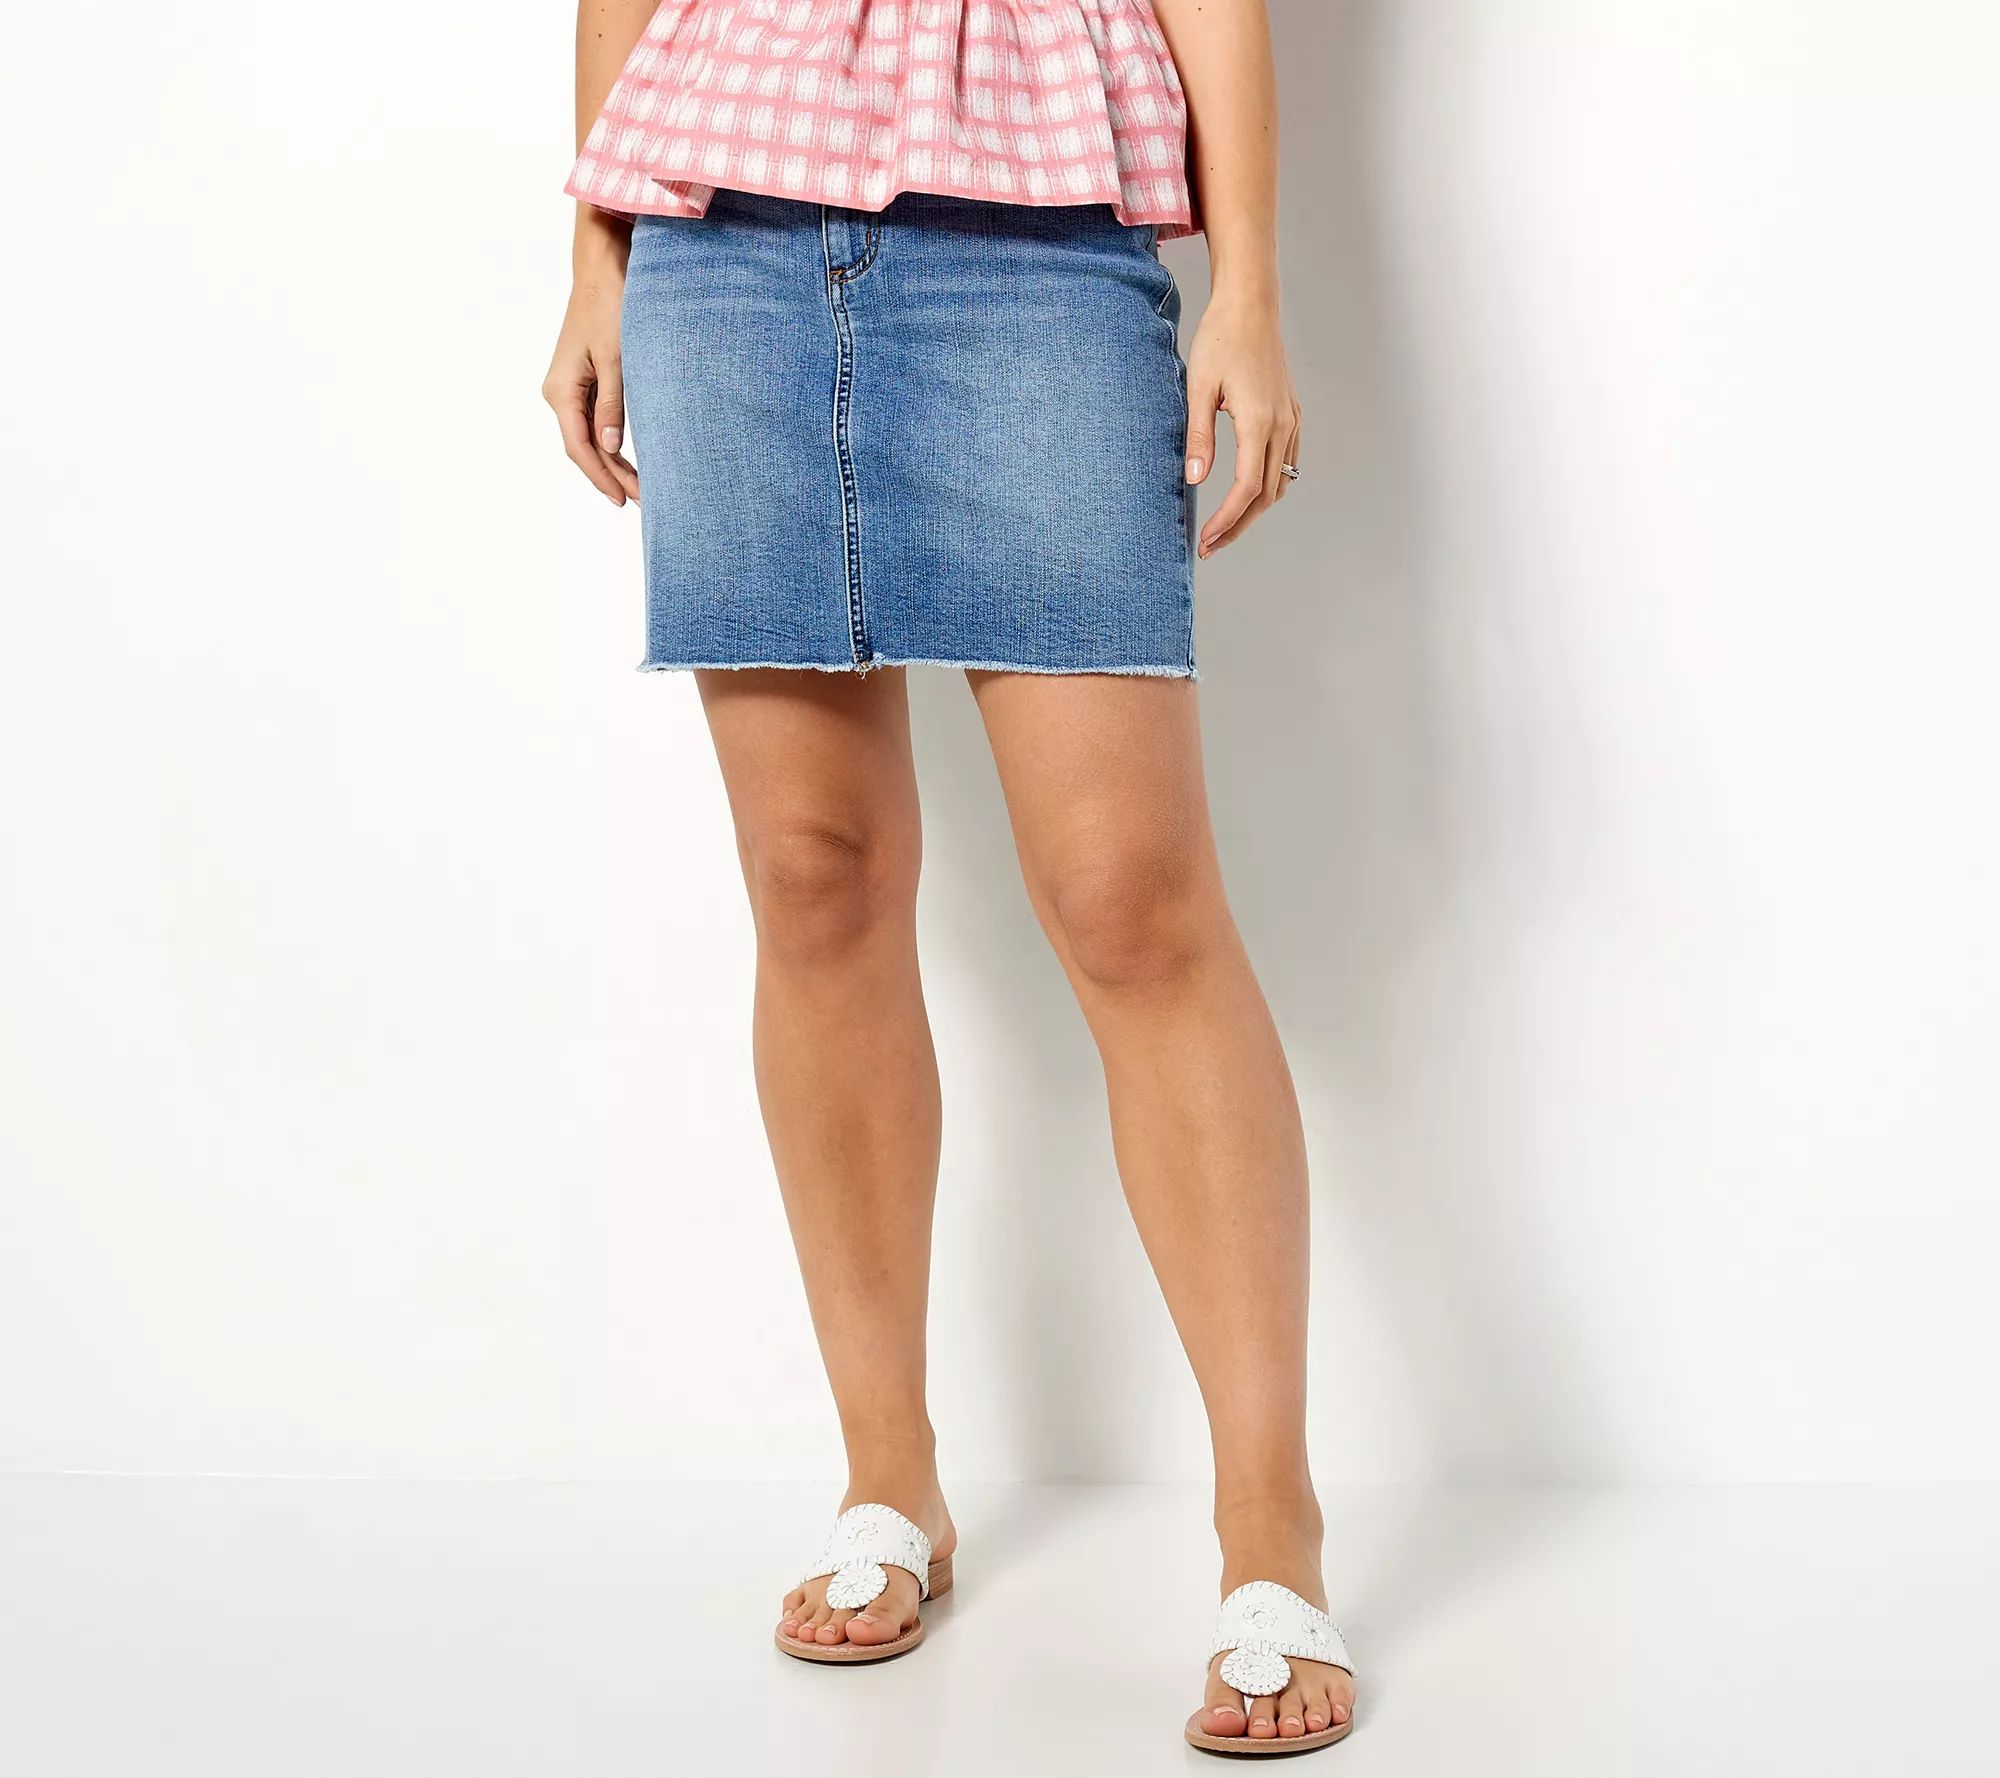 Candace Cameron Bure Petite Denim Skirt with Frayed Hem - QVC.com | QVC